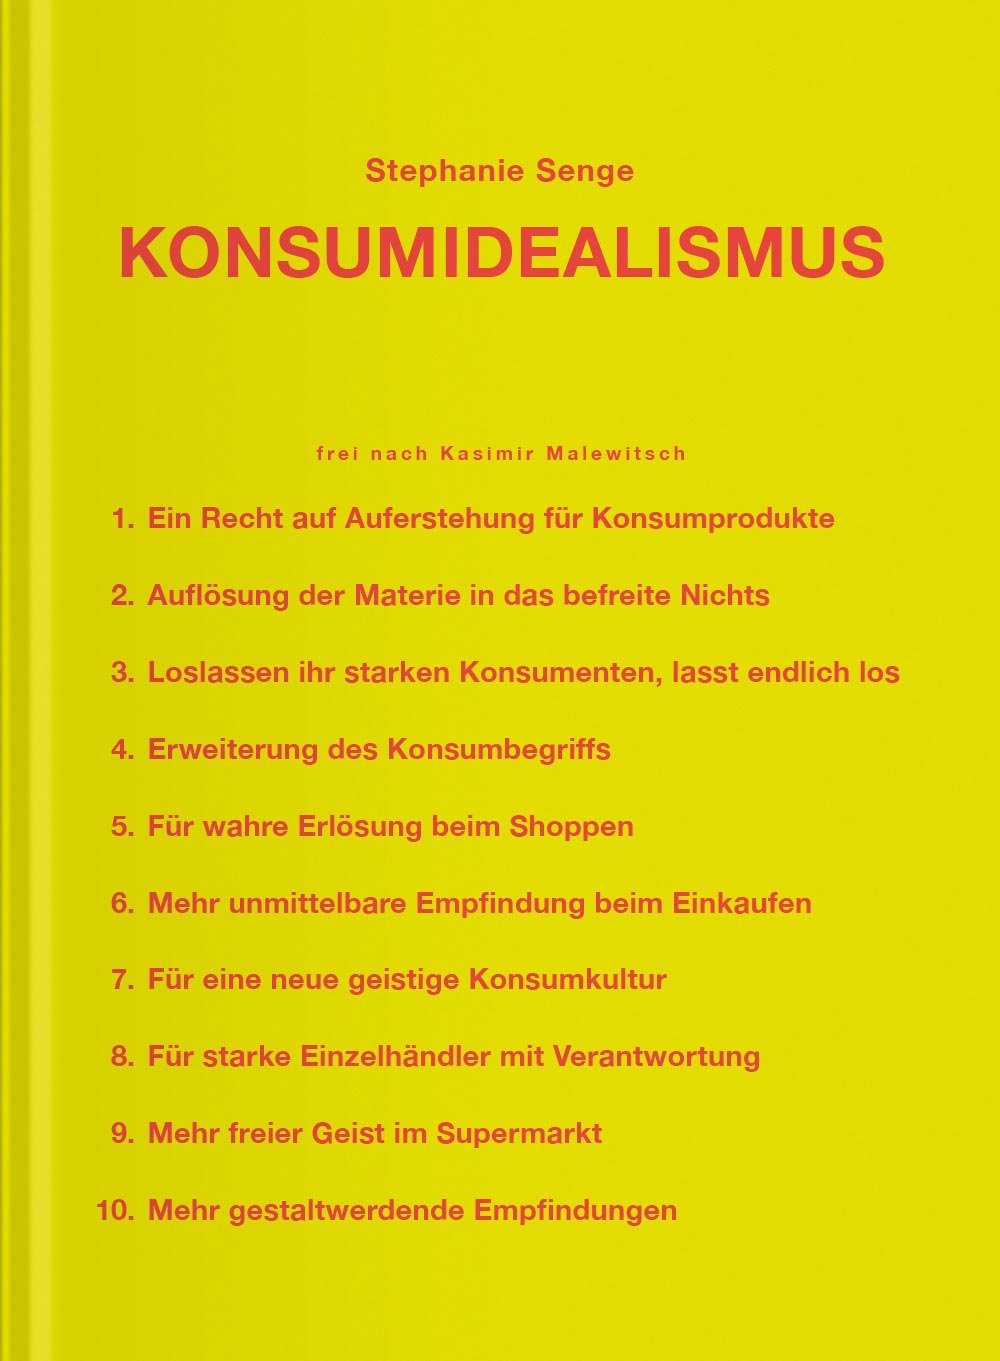 Stephanie Senge: Konsumidealismus, Bild: Museum für Konkrete Kunst Ingolstadt, 2015.